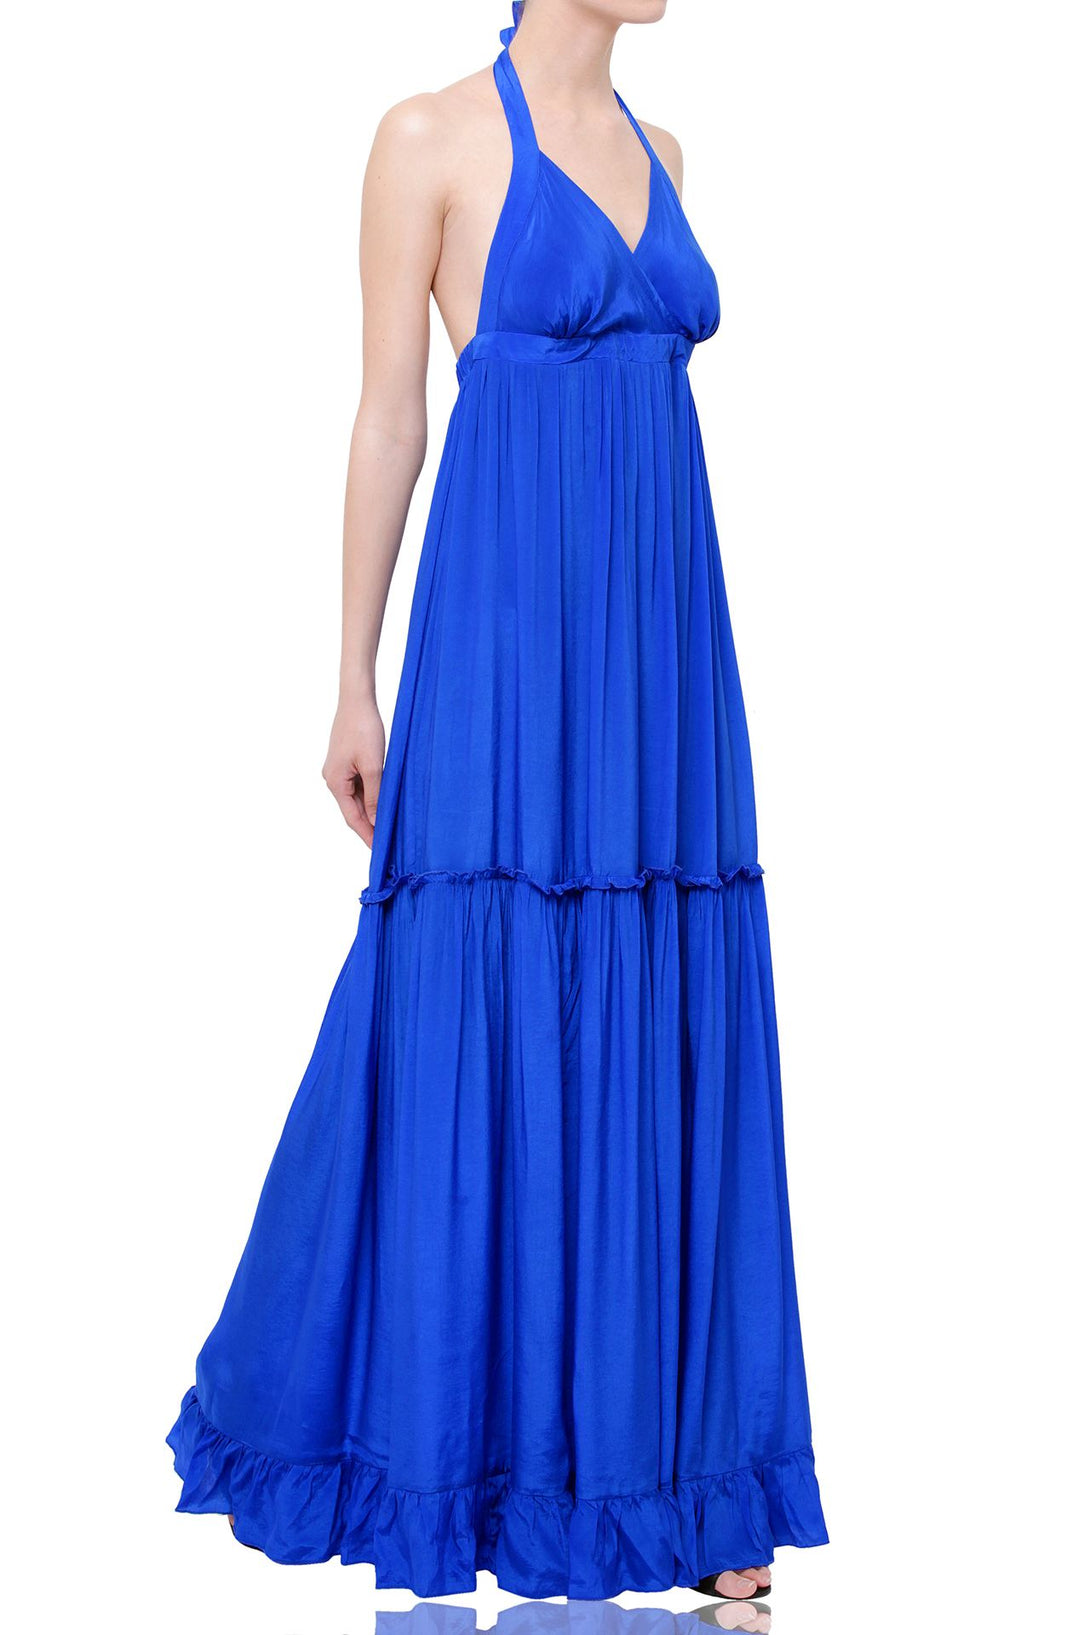  blue long dress formal, long dresses for women, flowy maxi dress, infinity plus size dress,